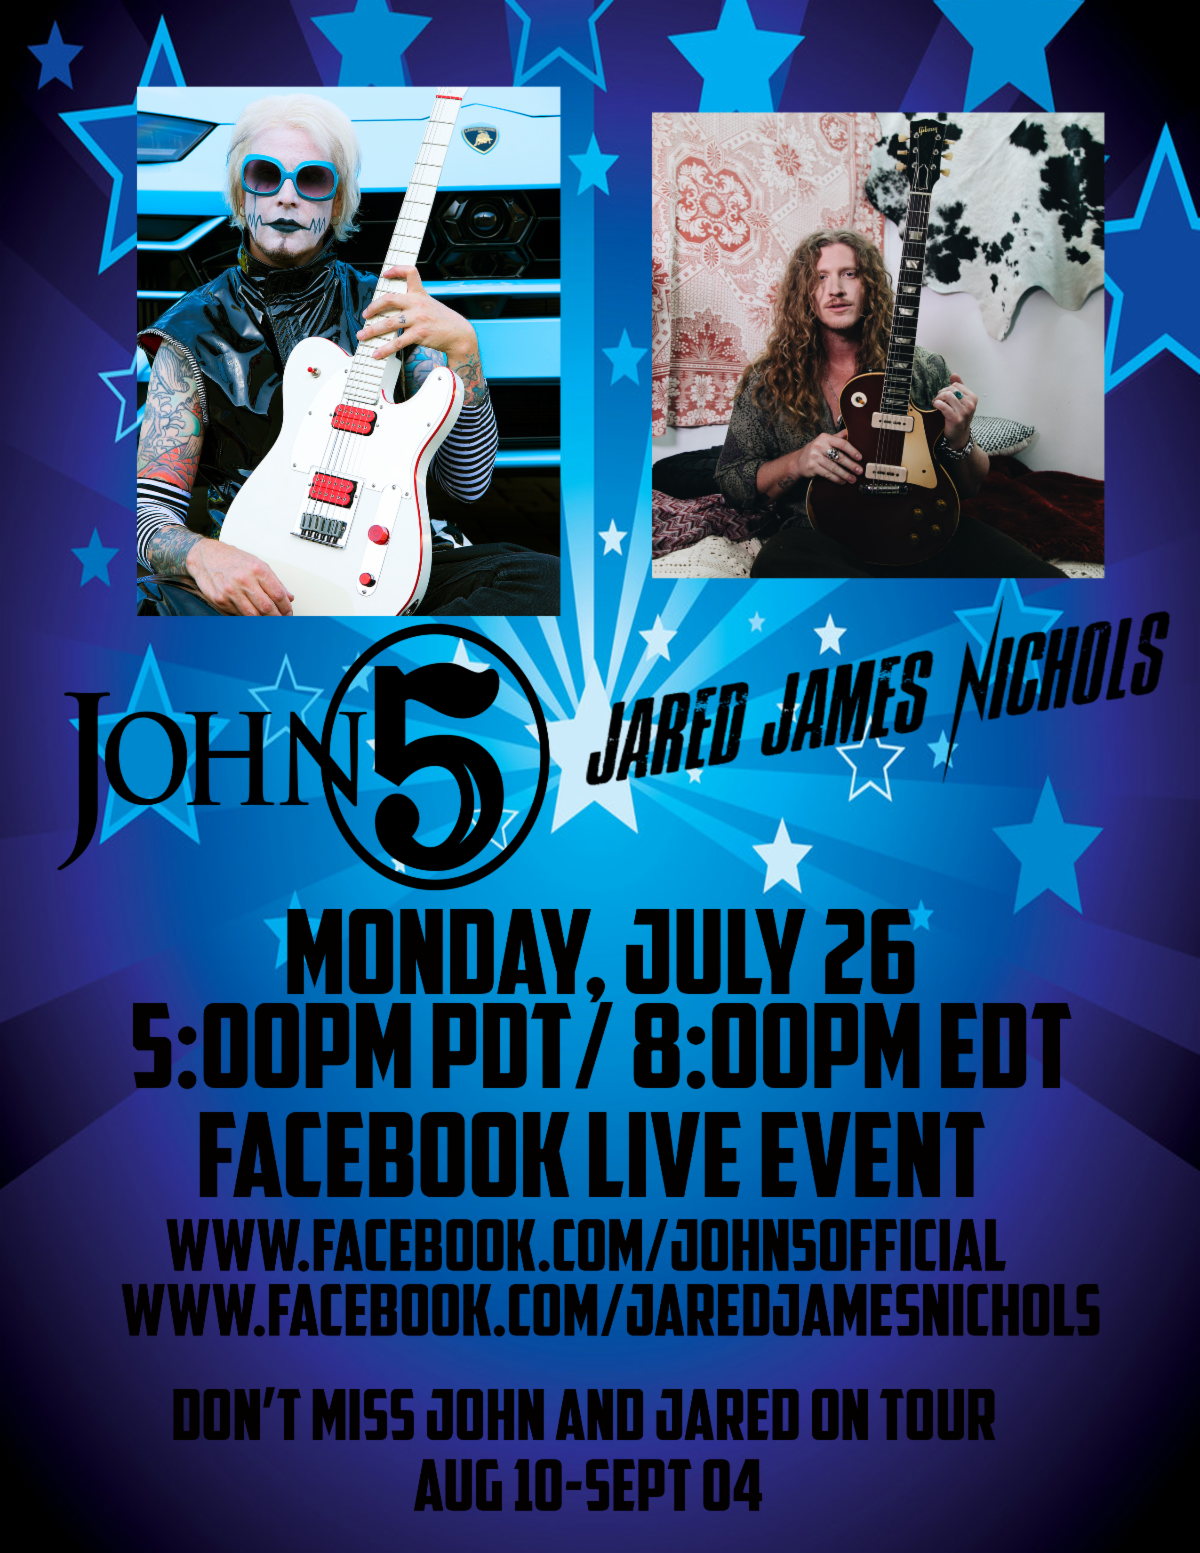 John 5 And Jared James Nichols Facebook Live Event